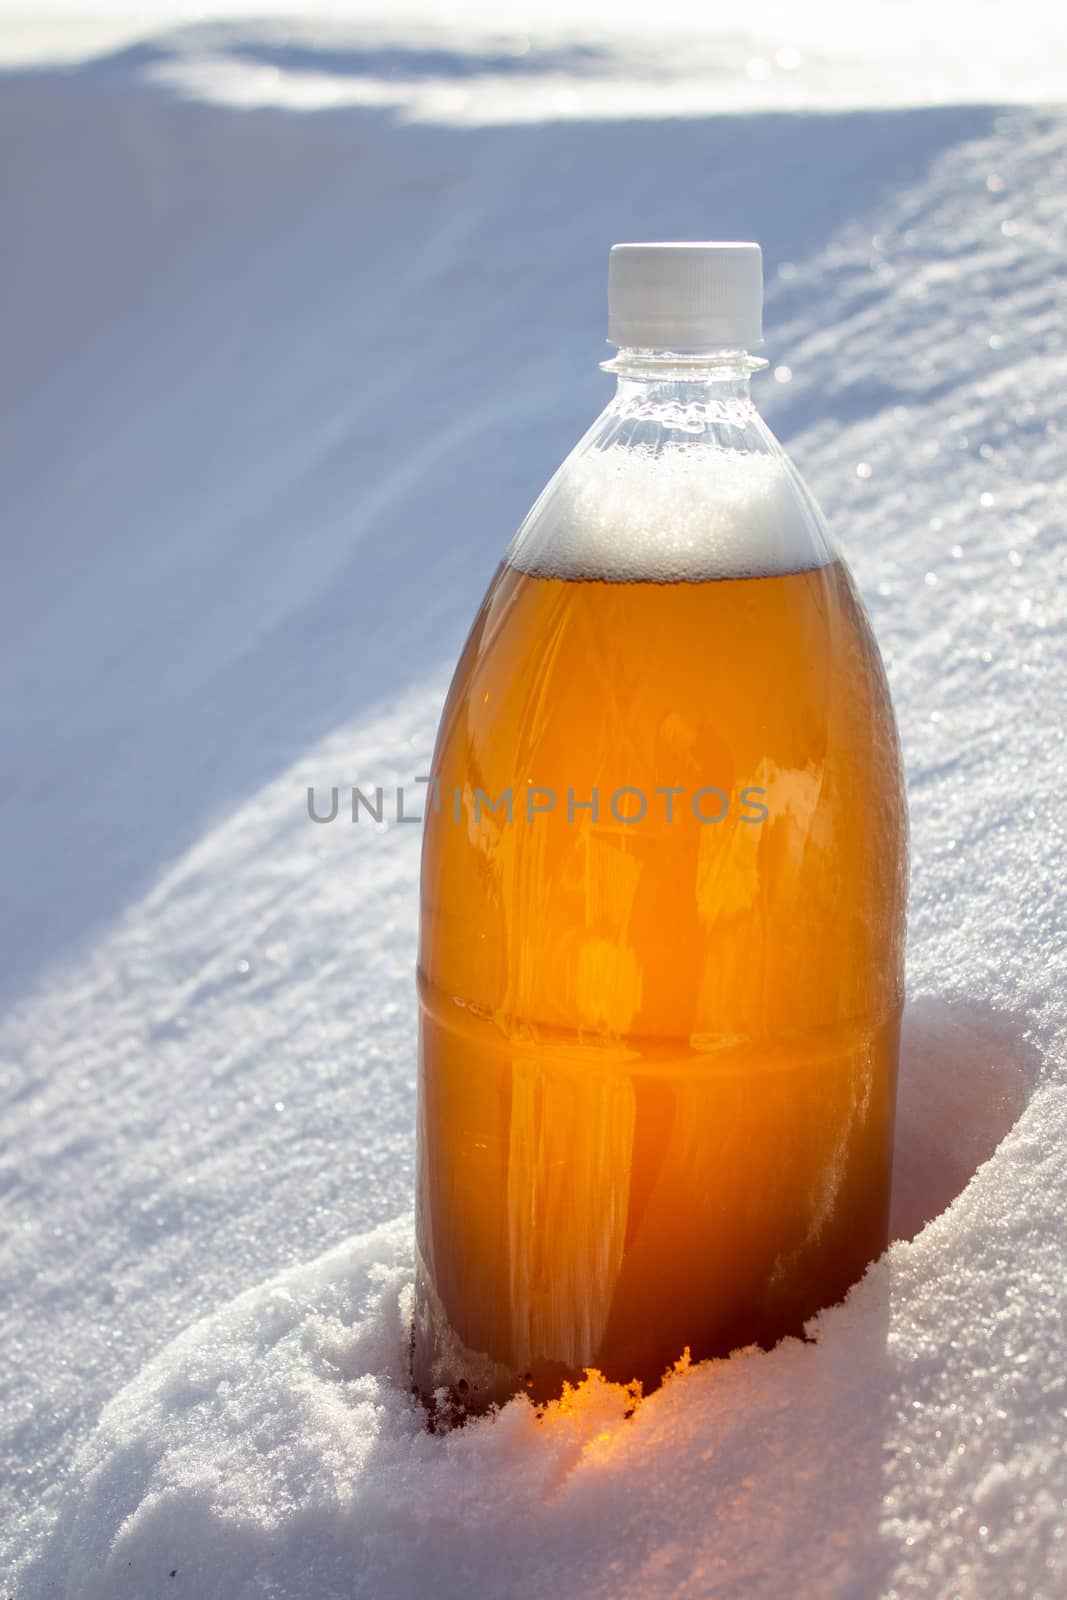 Plastic beer bottle in the snow in winter in nature, beer background